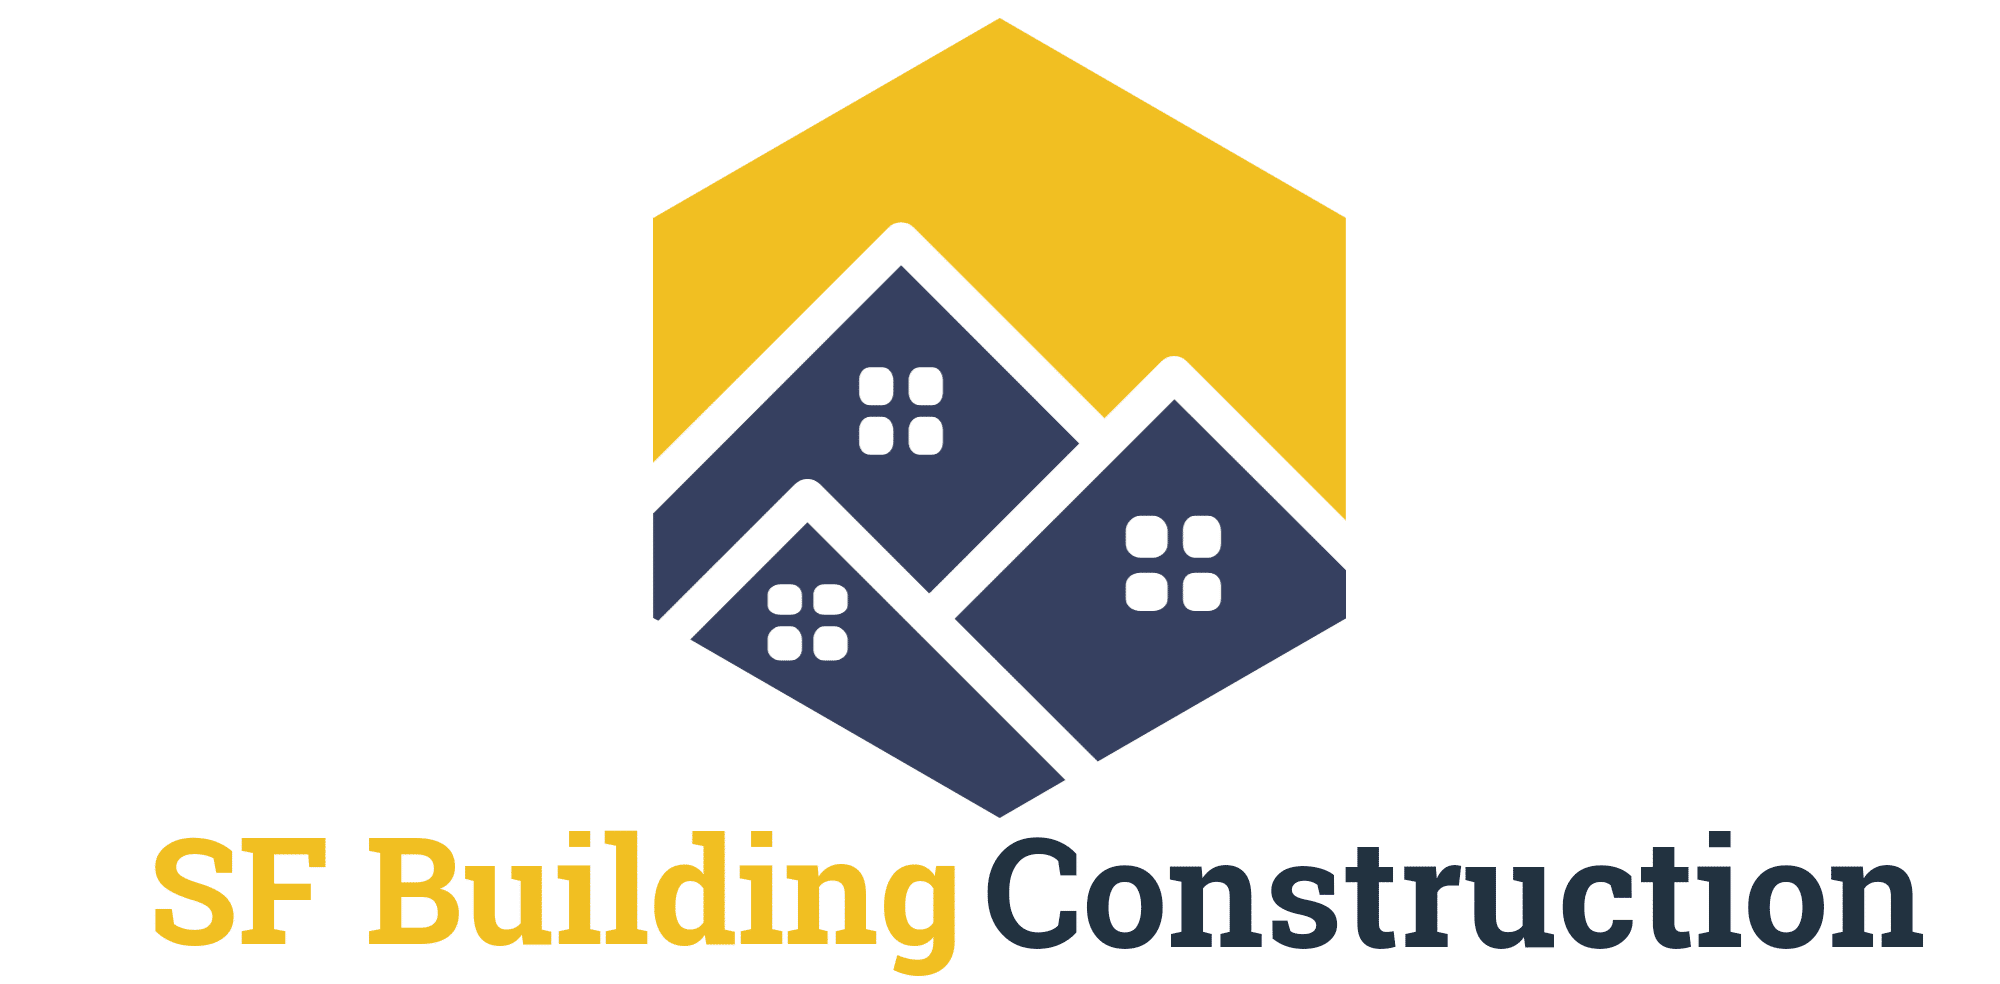 SF Building Construction picture logo